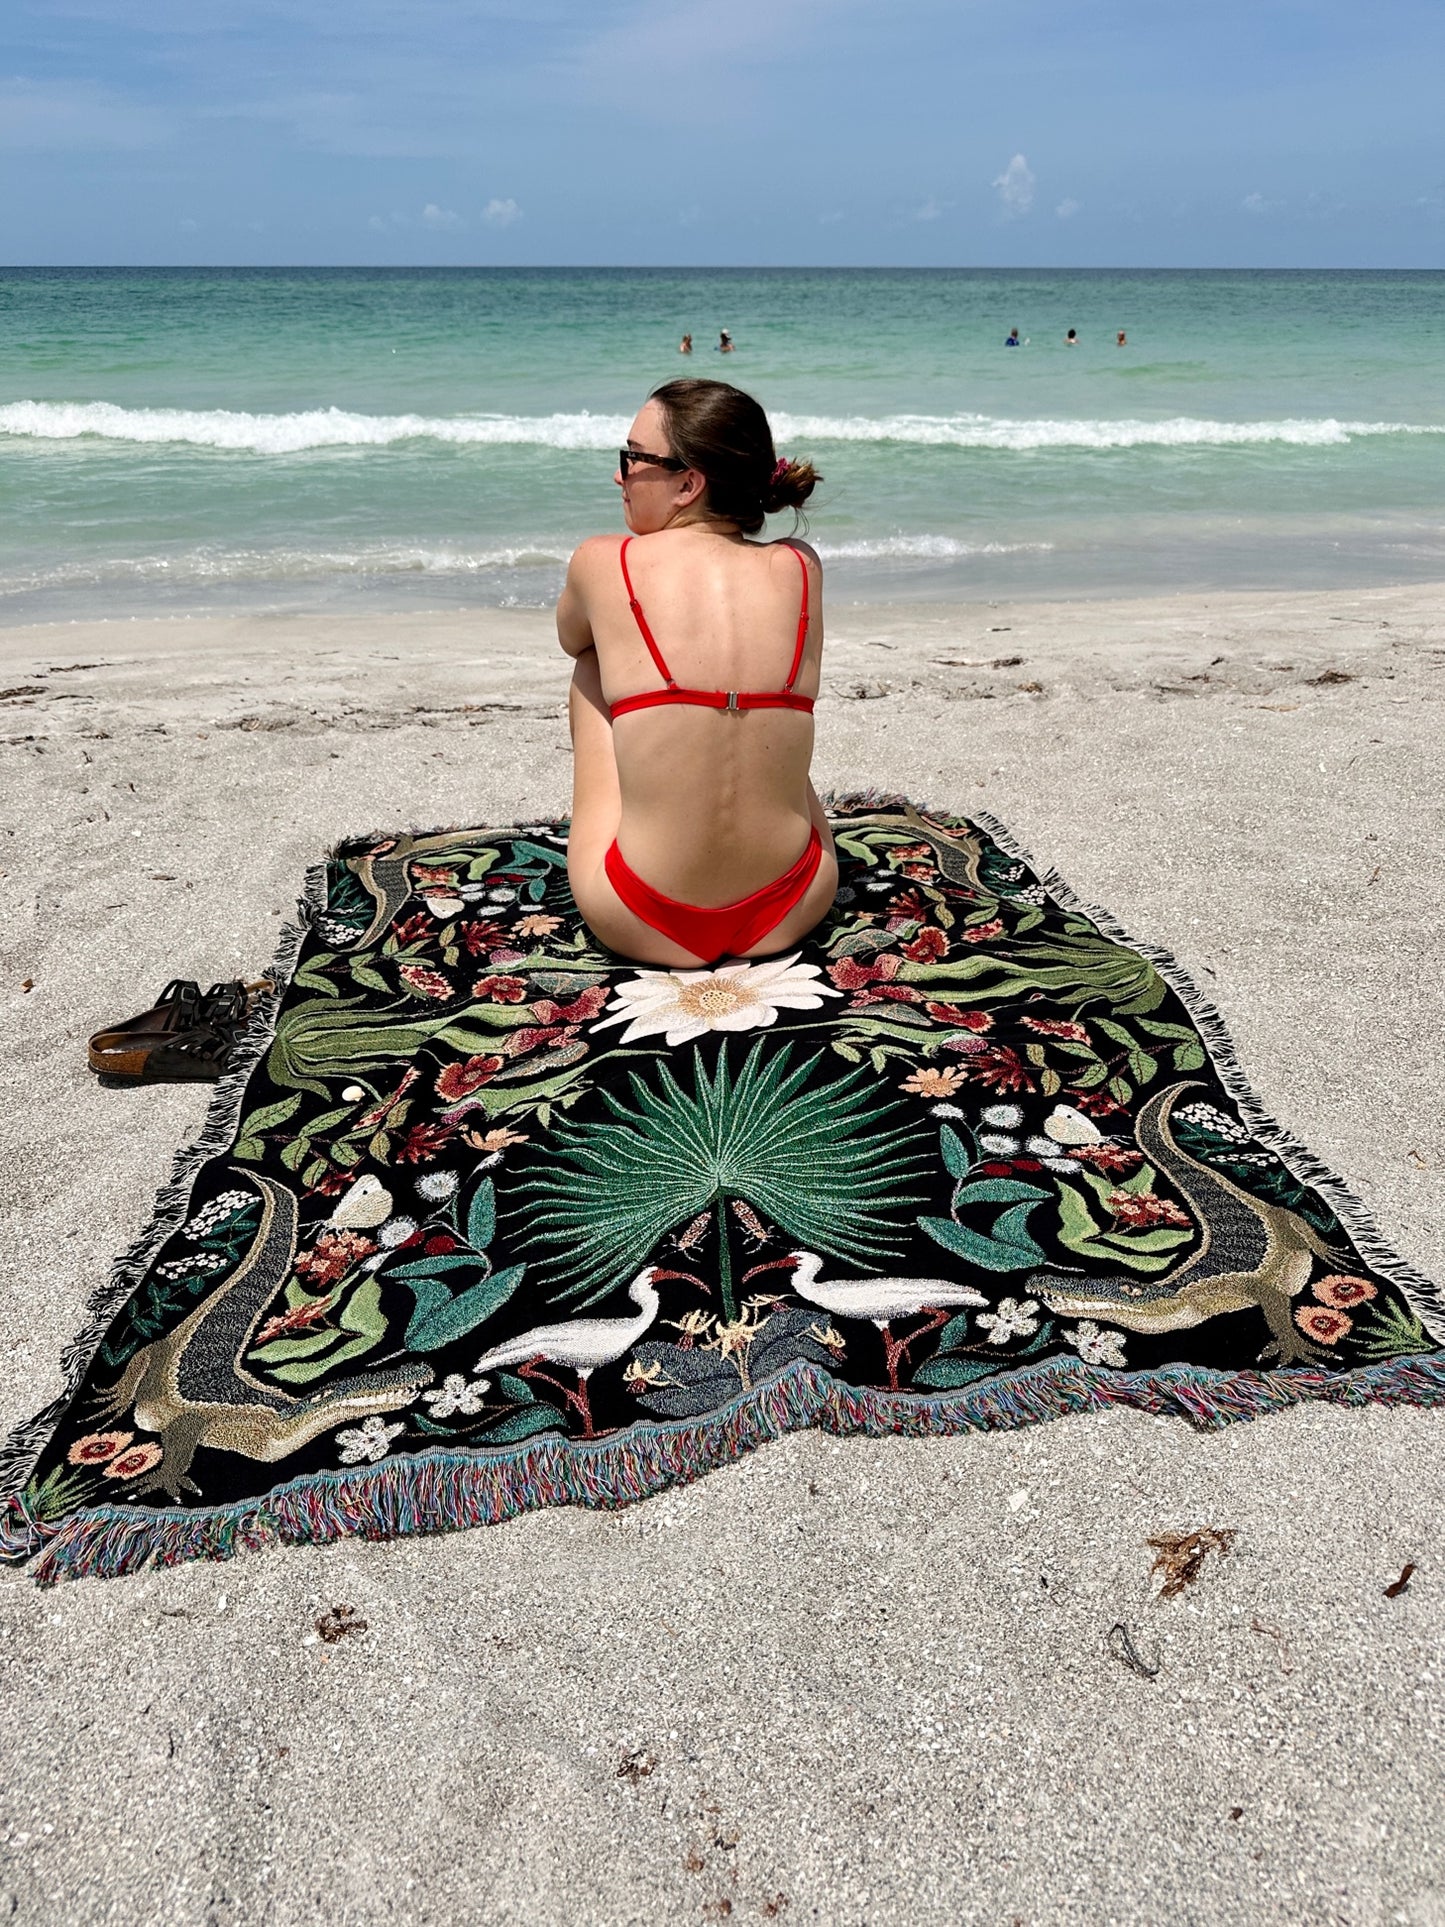 Woven Blanket - Florida Native